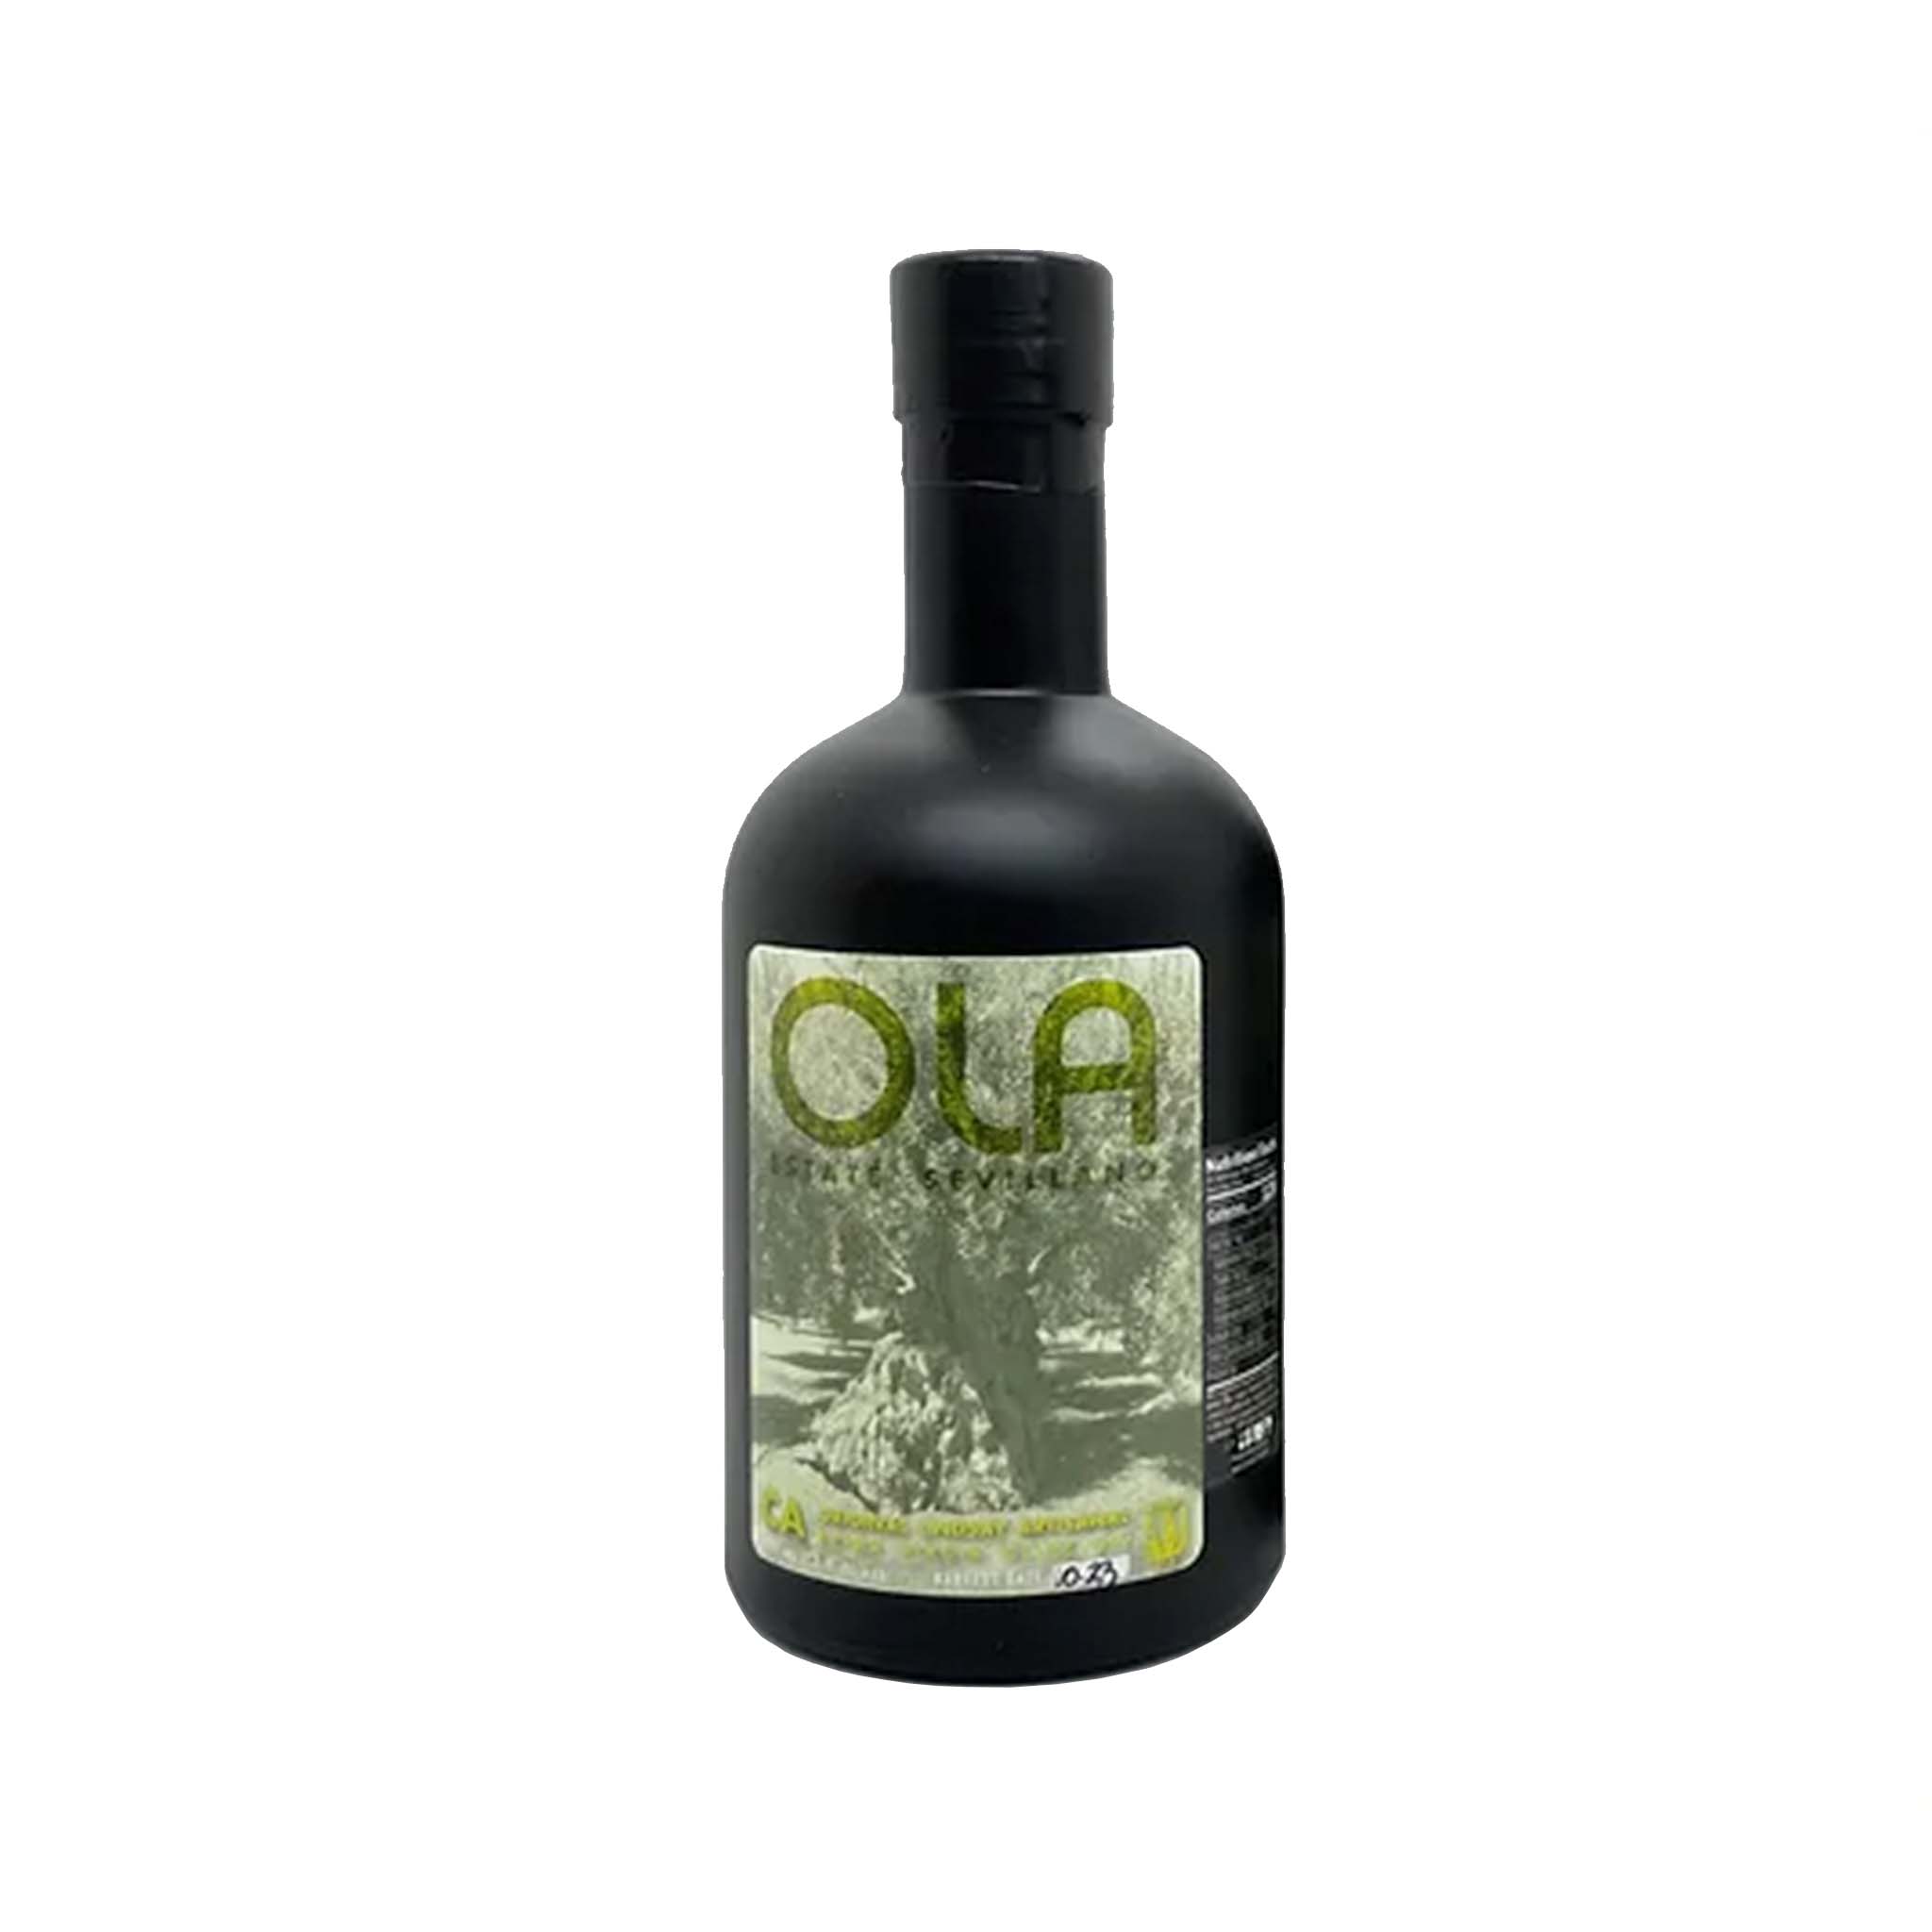 OLIVAIA'S OLA EXTRA VIRGIN OLIVE OIL 500ml